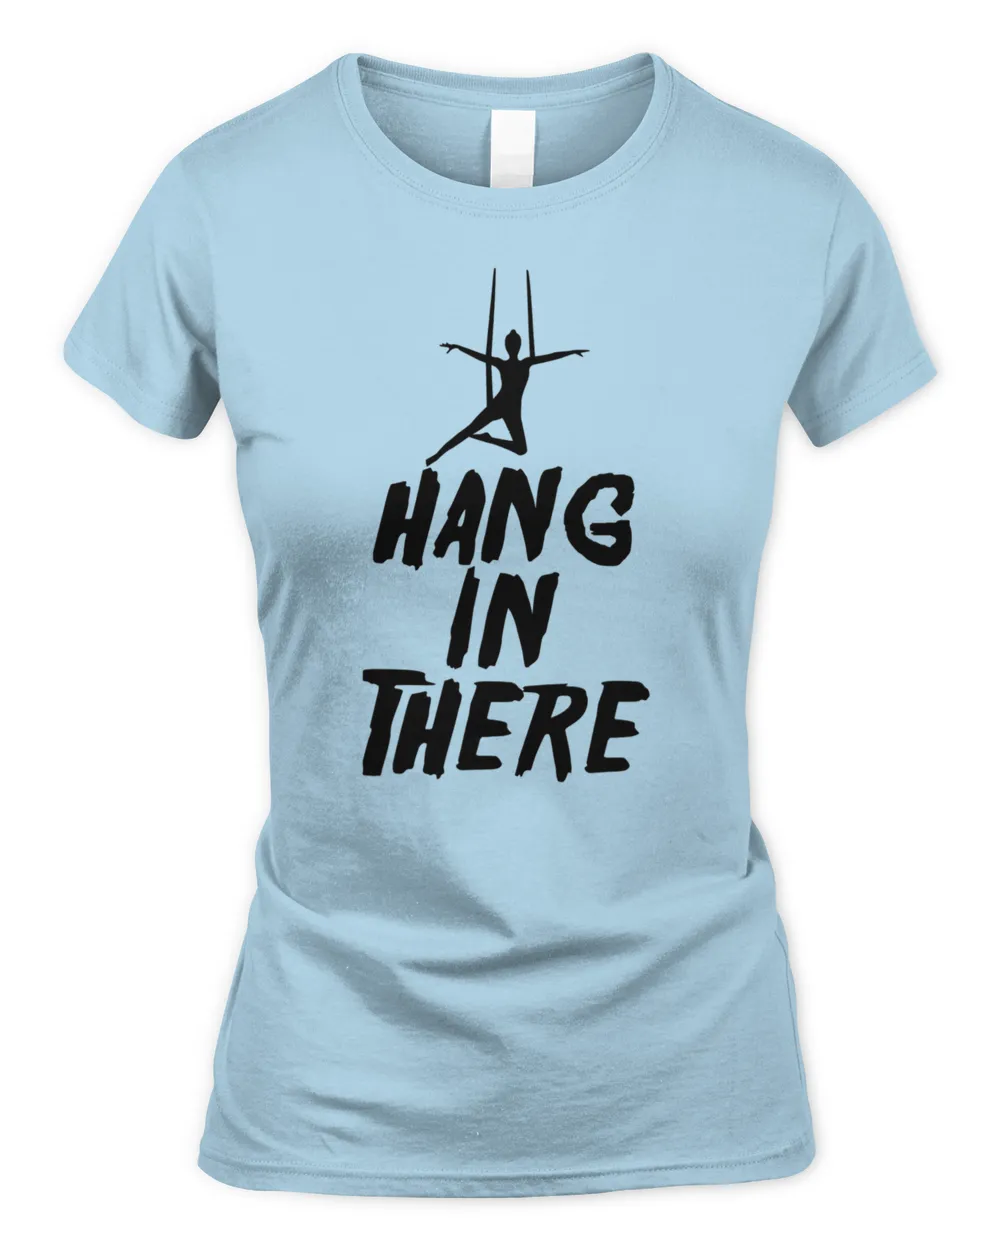 Hang In There Tee Shirts Women Aerial Skills Yoga T Shirt